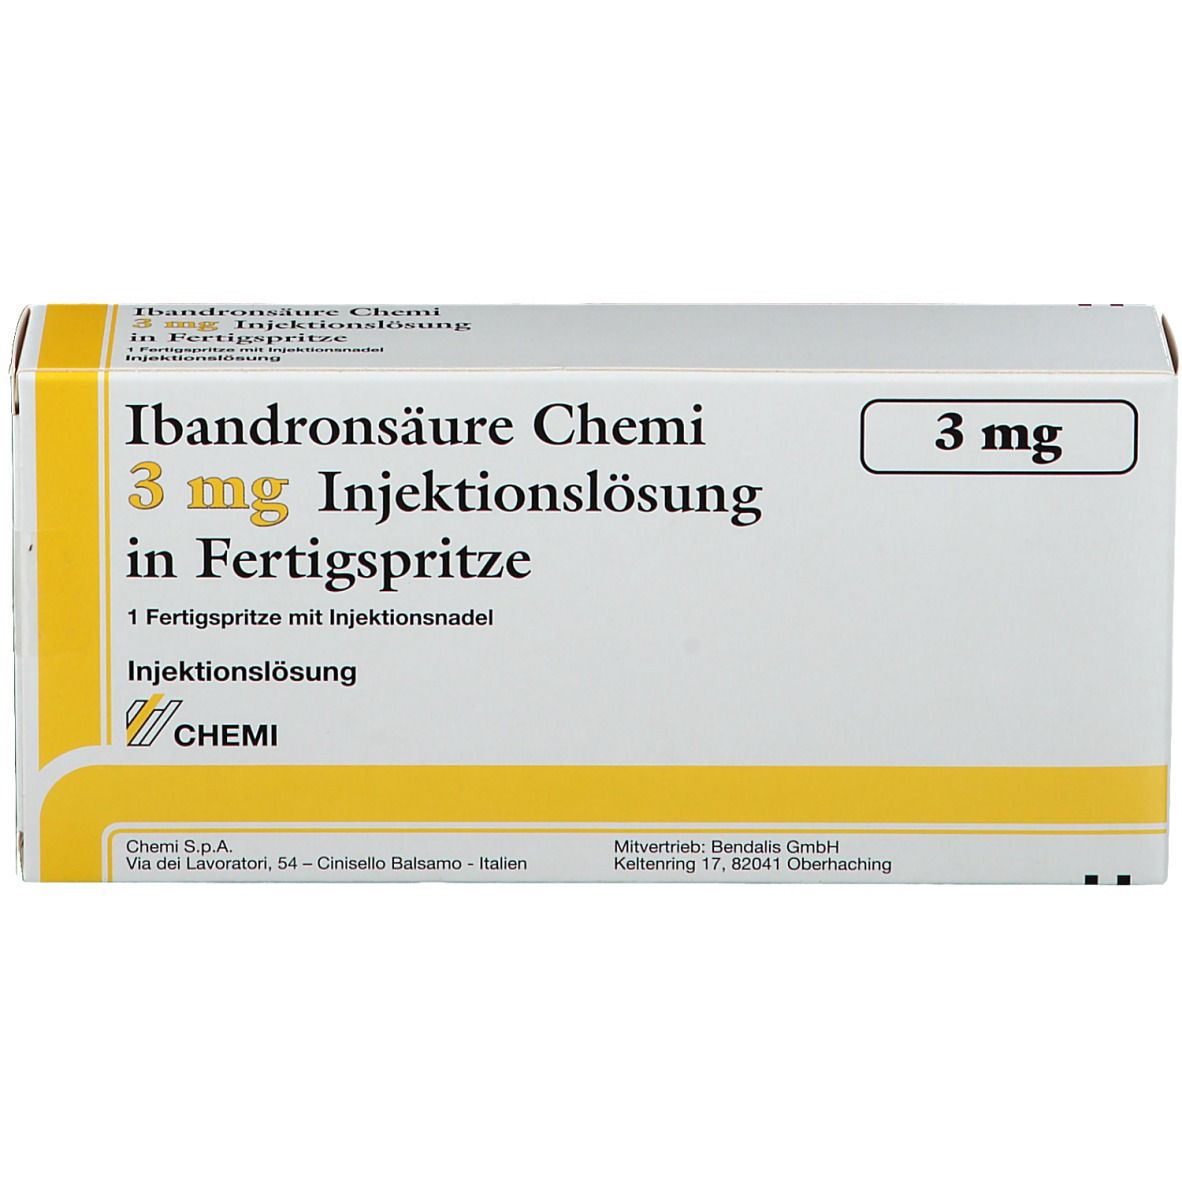 Ibrandronsäure Chemi 3 mg